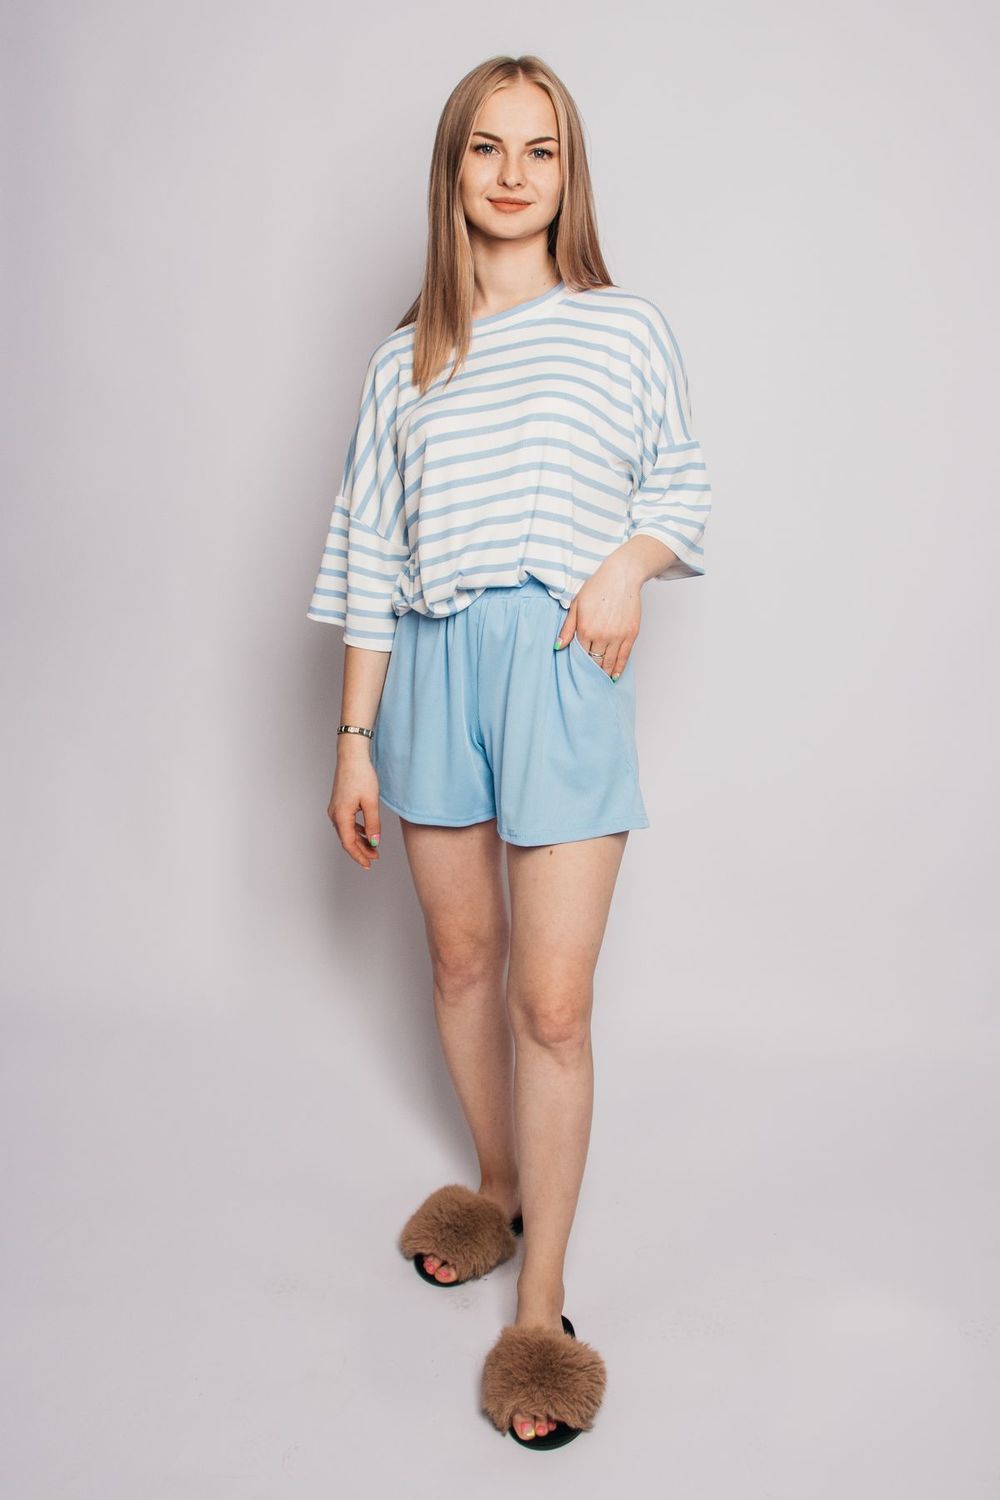 Комплект женский (футболка+шорты) 4357 - белый/голубая полоска